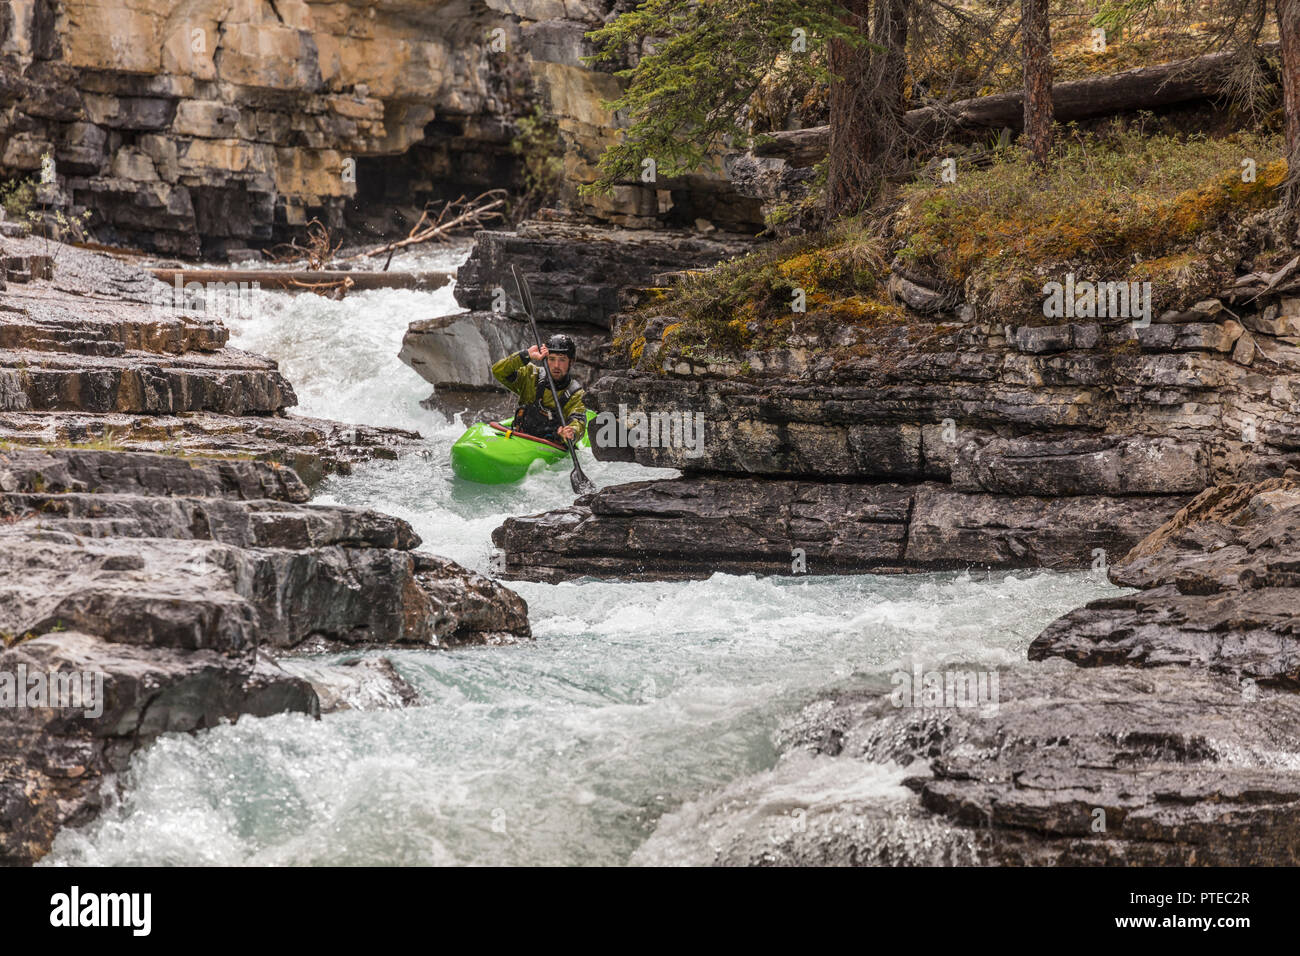 Kayaker negotiating rapids on Beauty Creek in Jasper National Park, Canada. Stock Photo